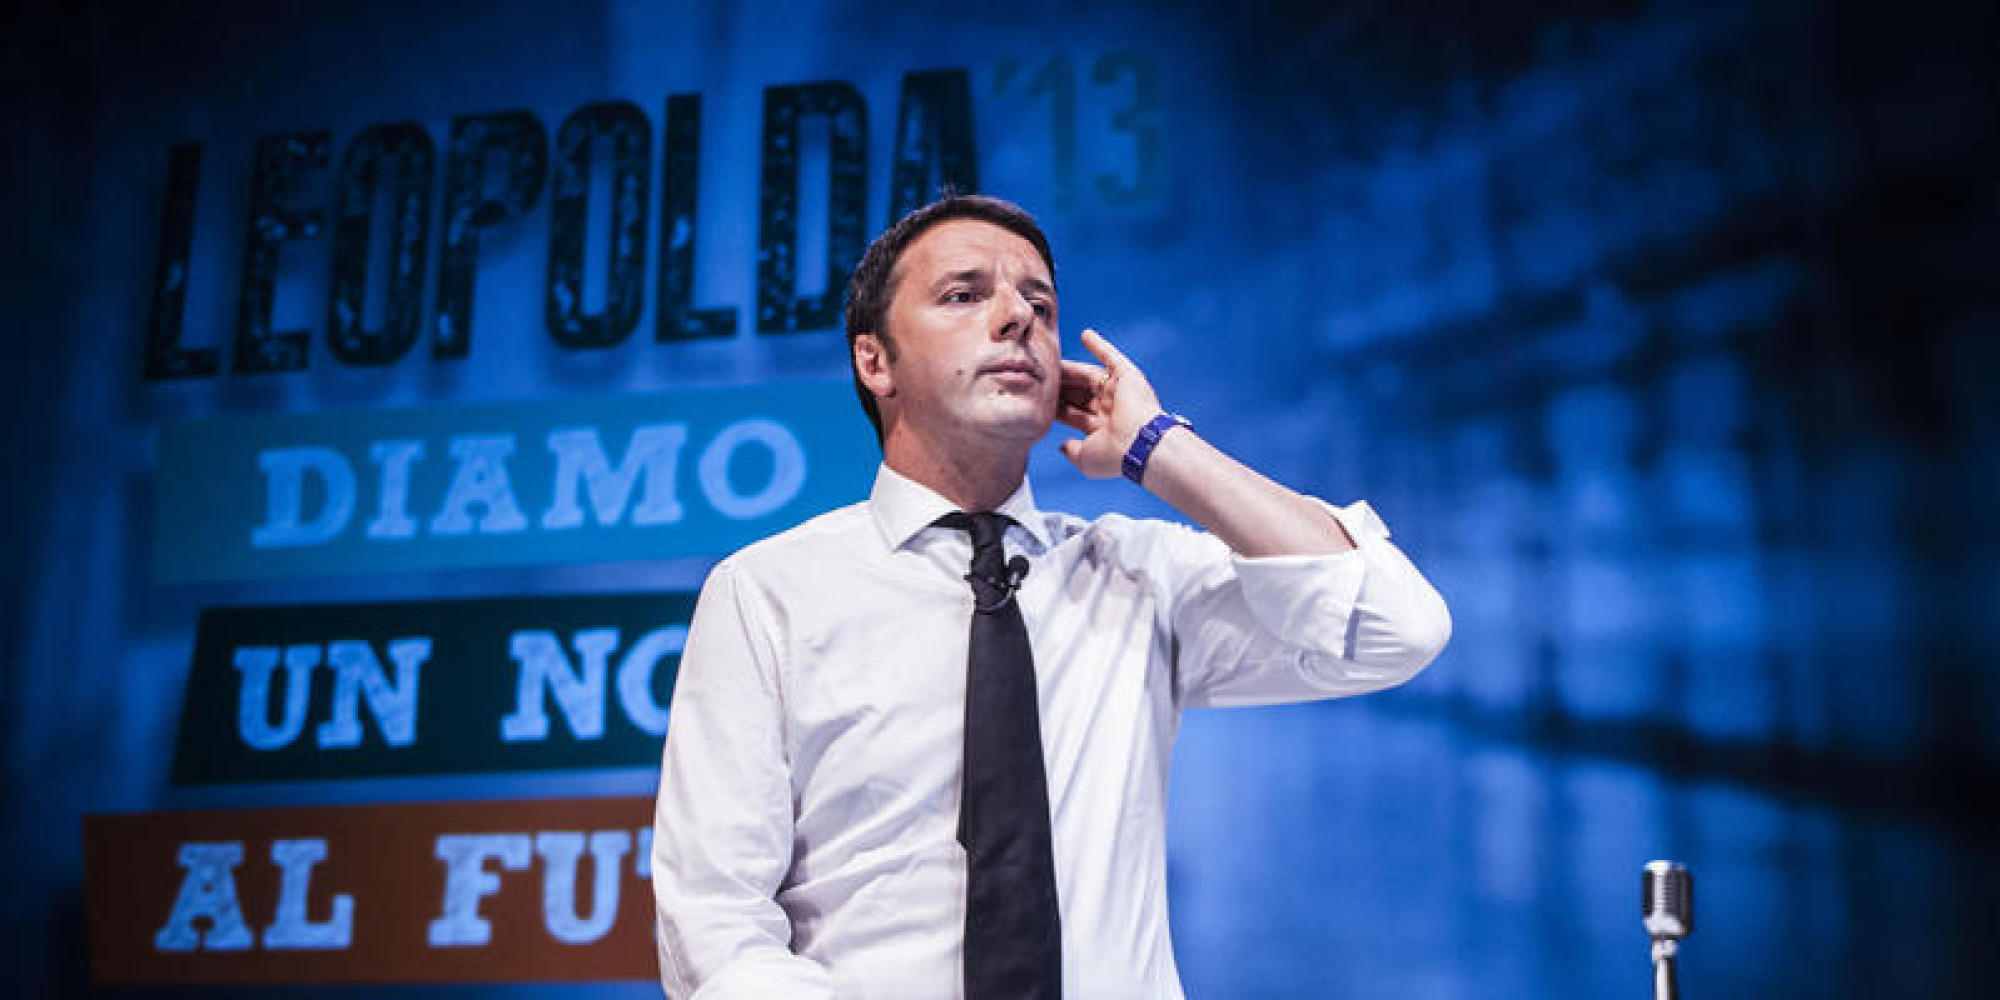  Matteo Renzi alla Leopolda (www.huffingtonpost.it)